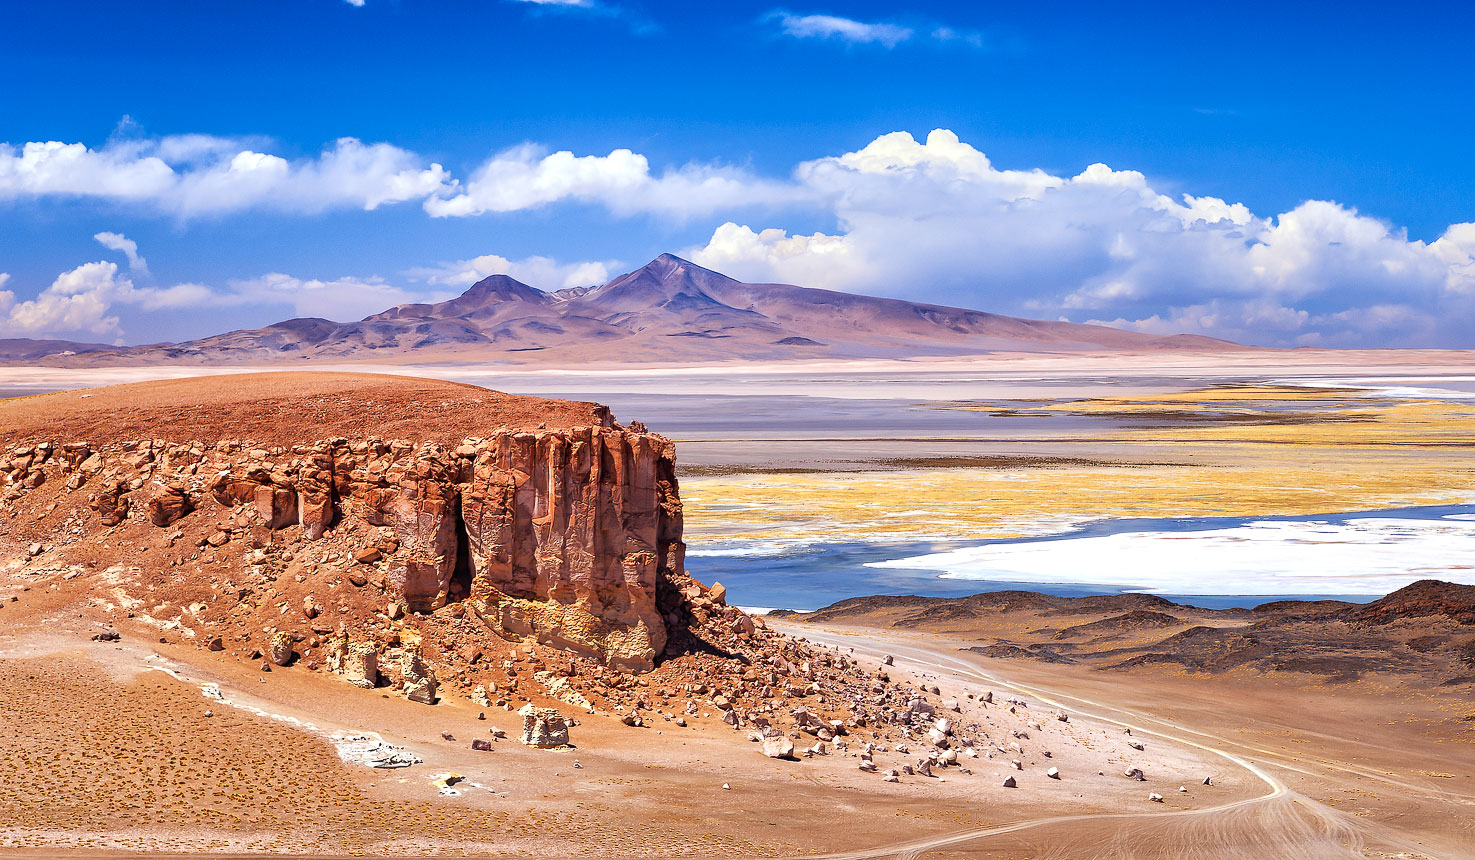 Safari to Alto Atacama Desert Lodge with Africa Travel Resource